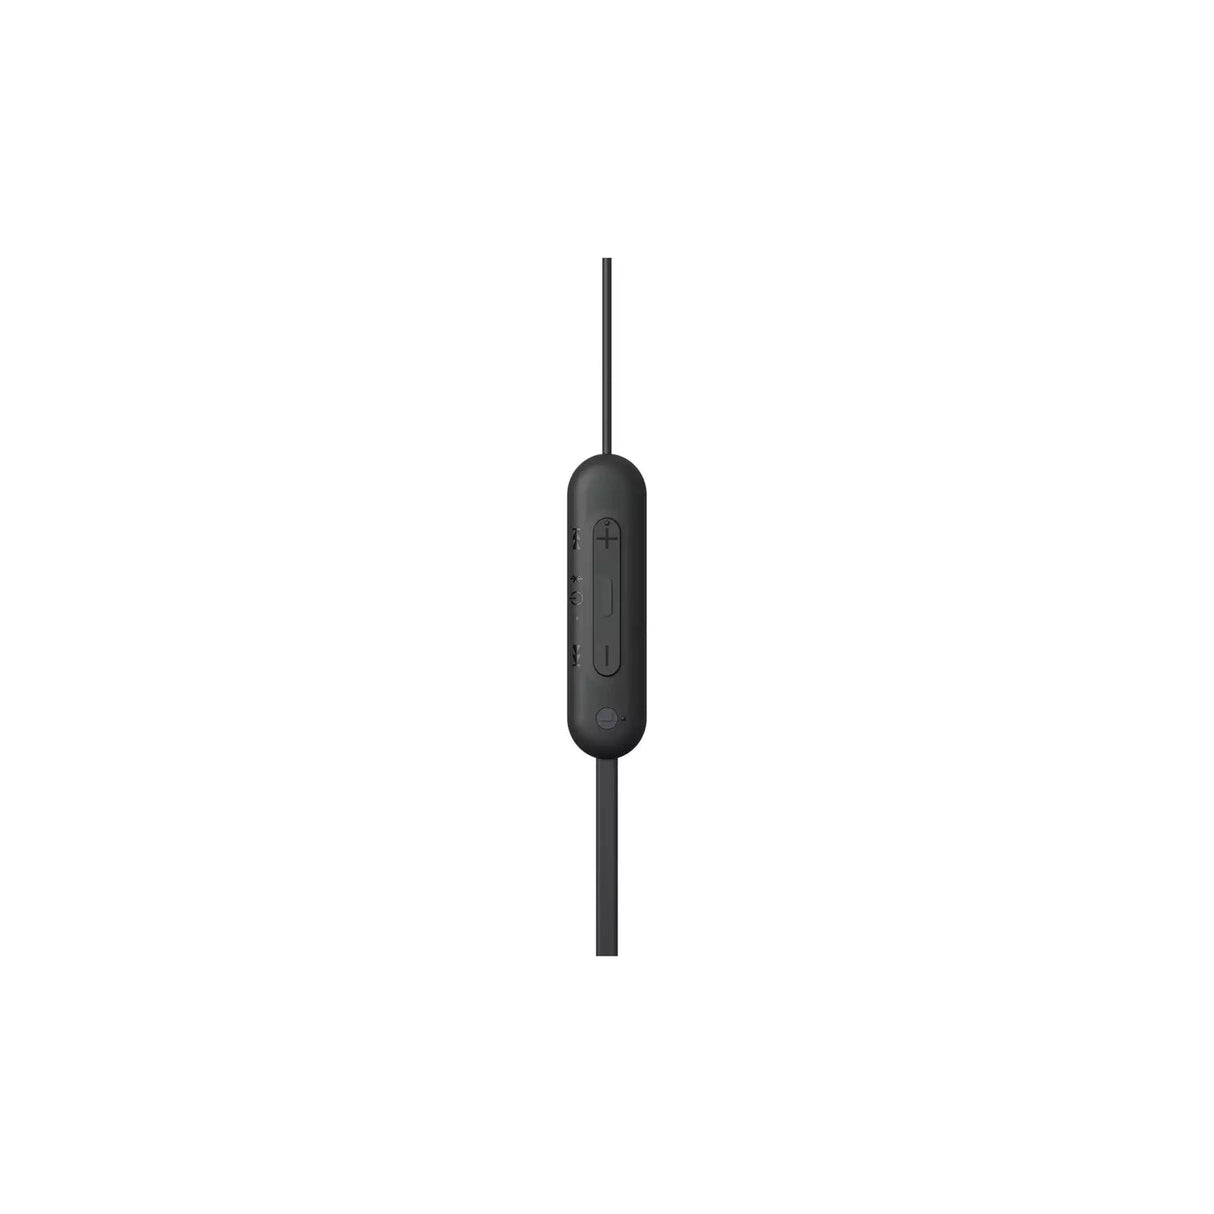 Sony WI-C100 Wireless Stereo Headphones - Black - Refurbished Pristine